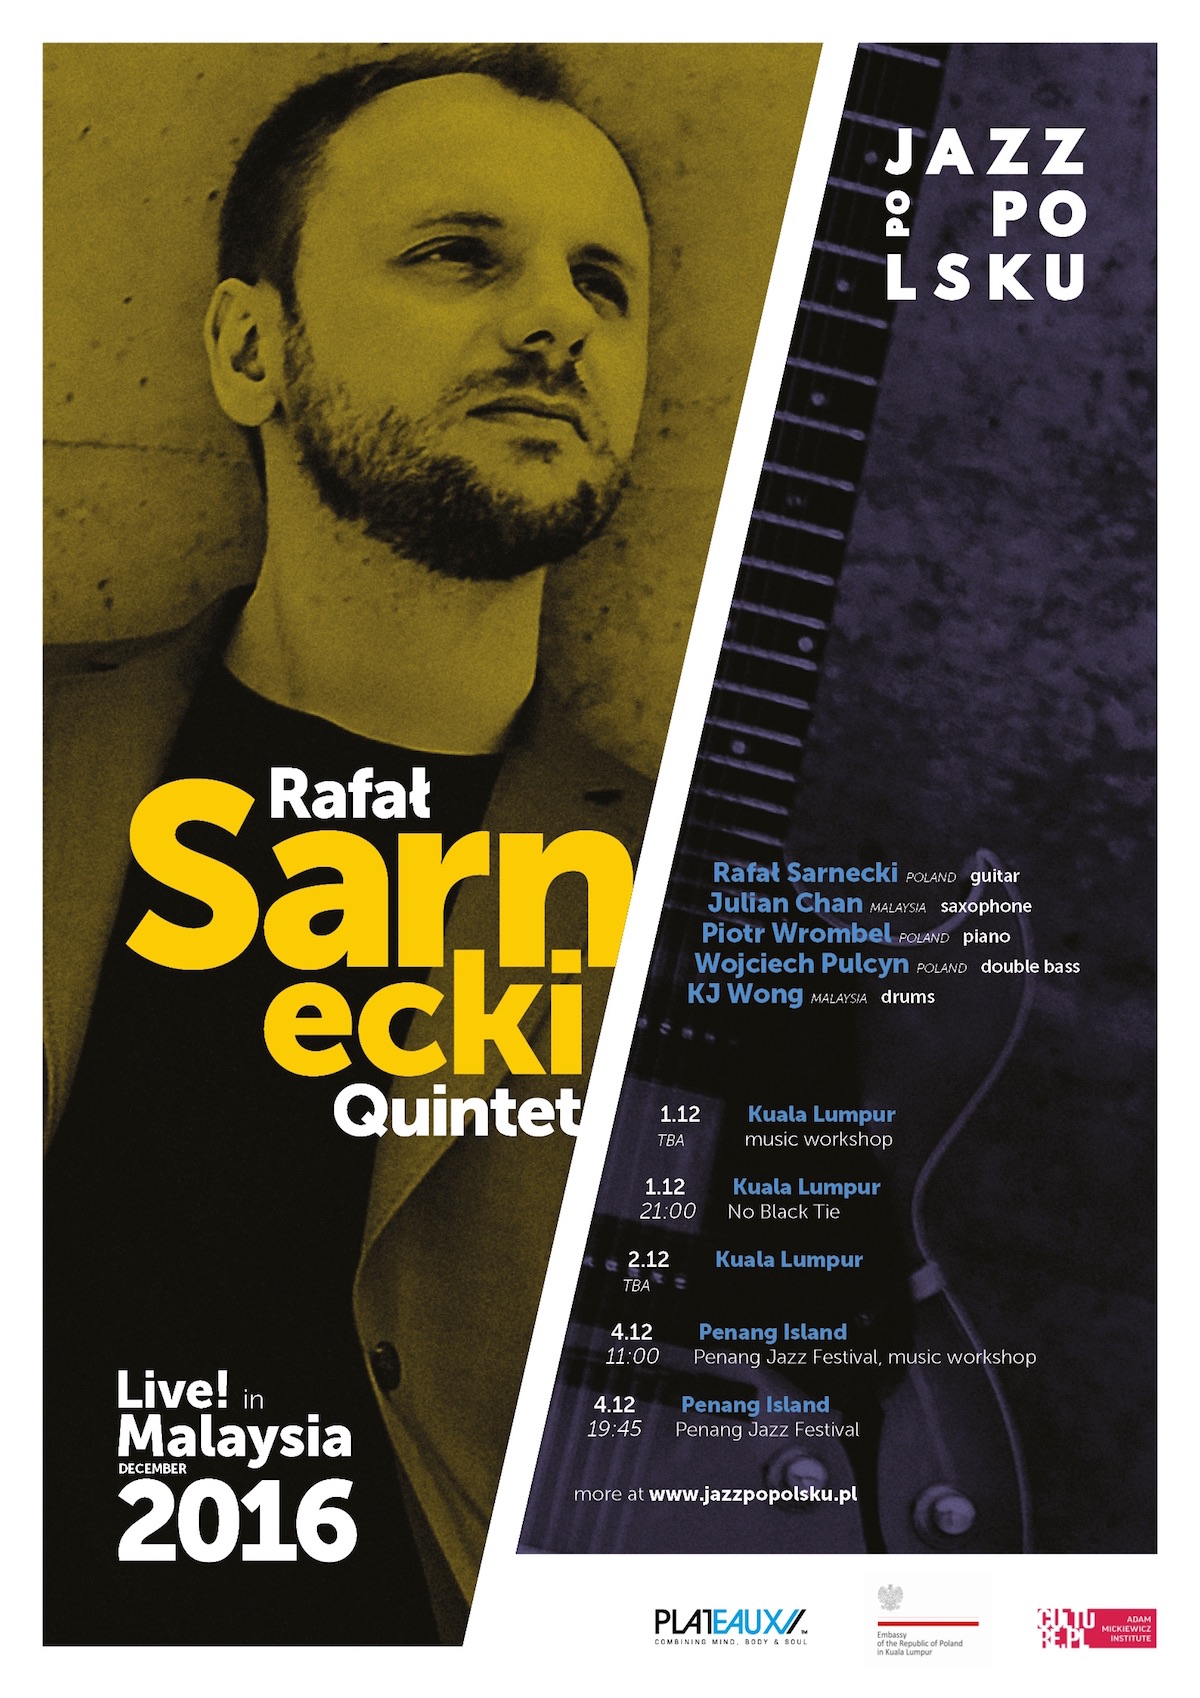 Rafał Sarnecki Live in Malaysia 2016